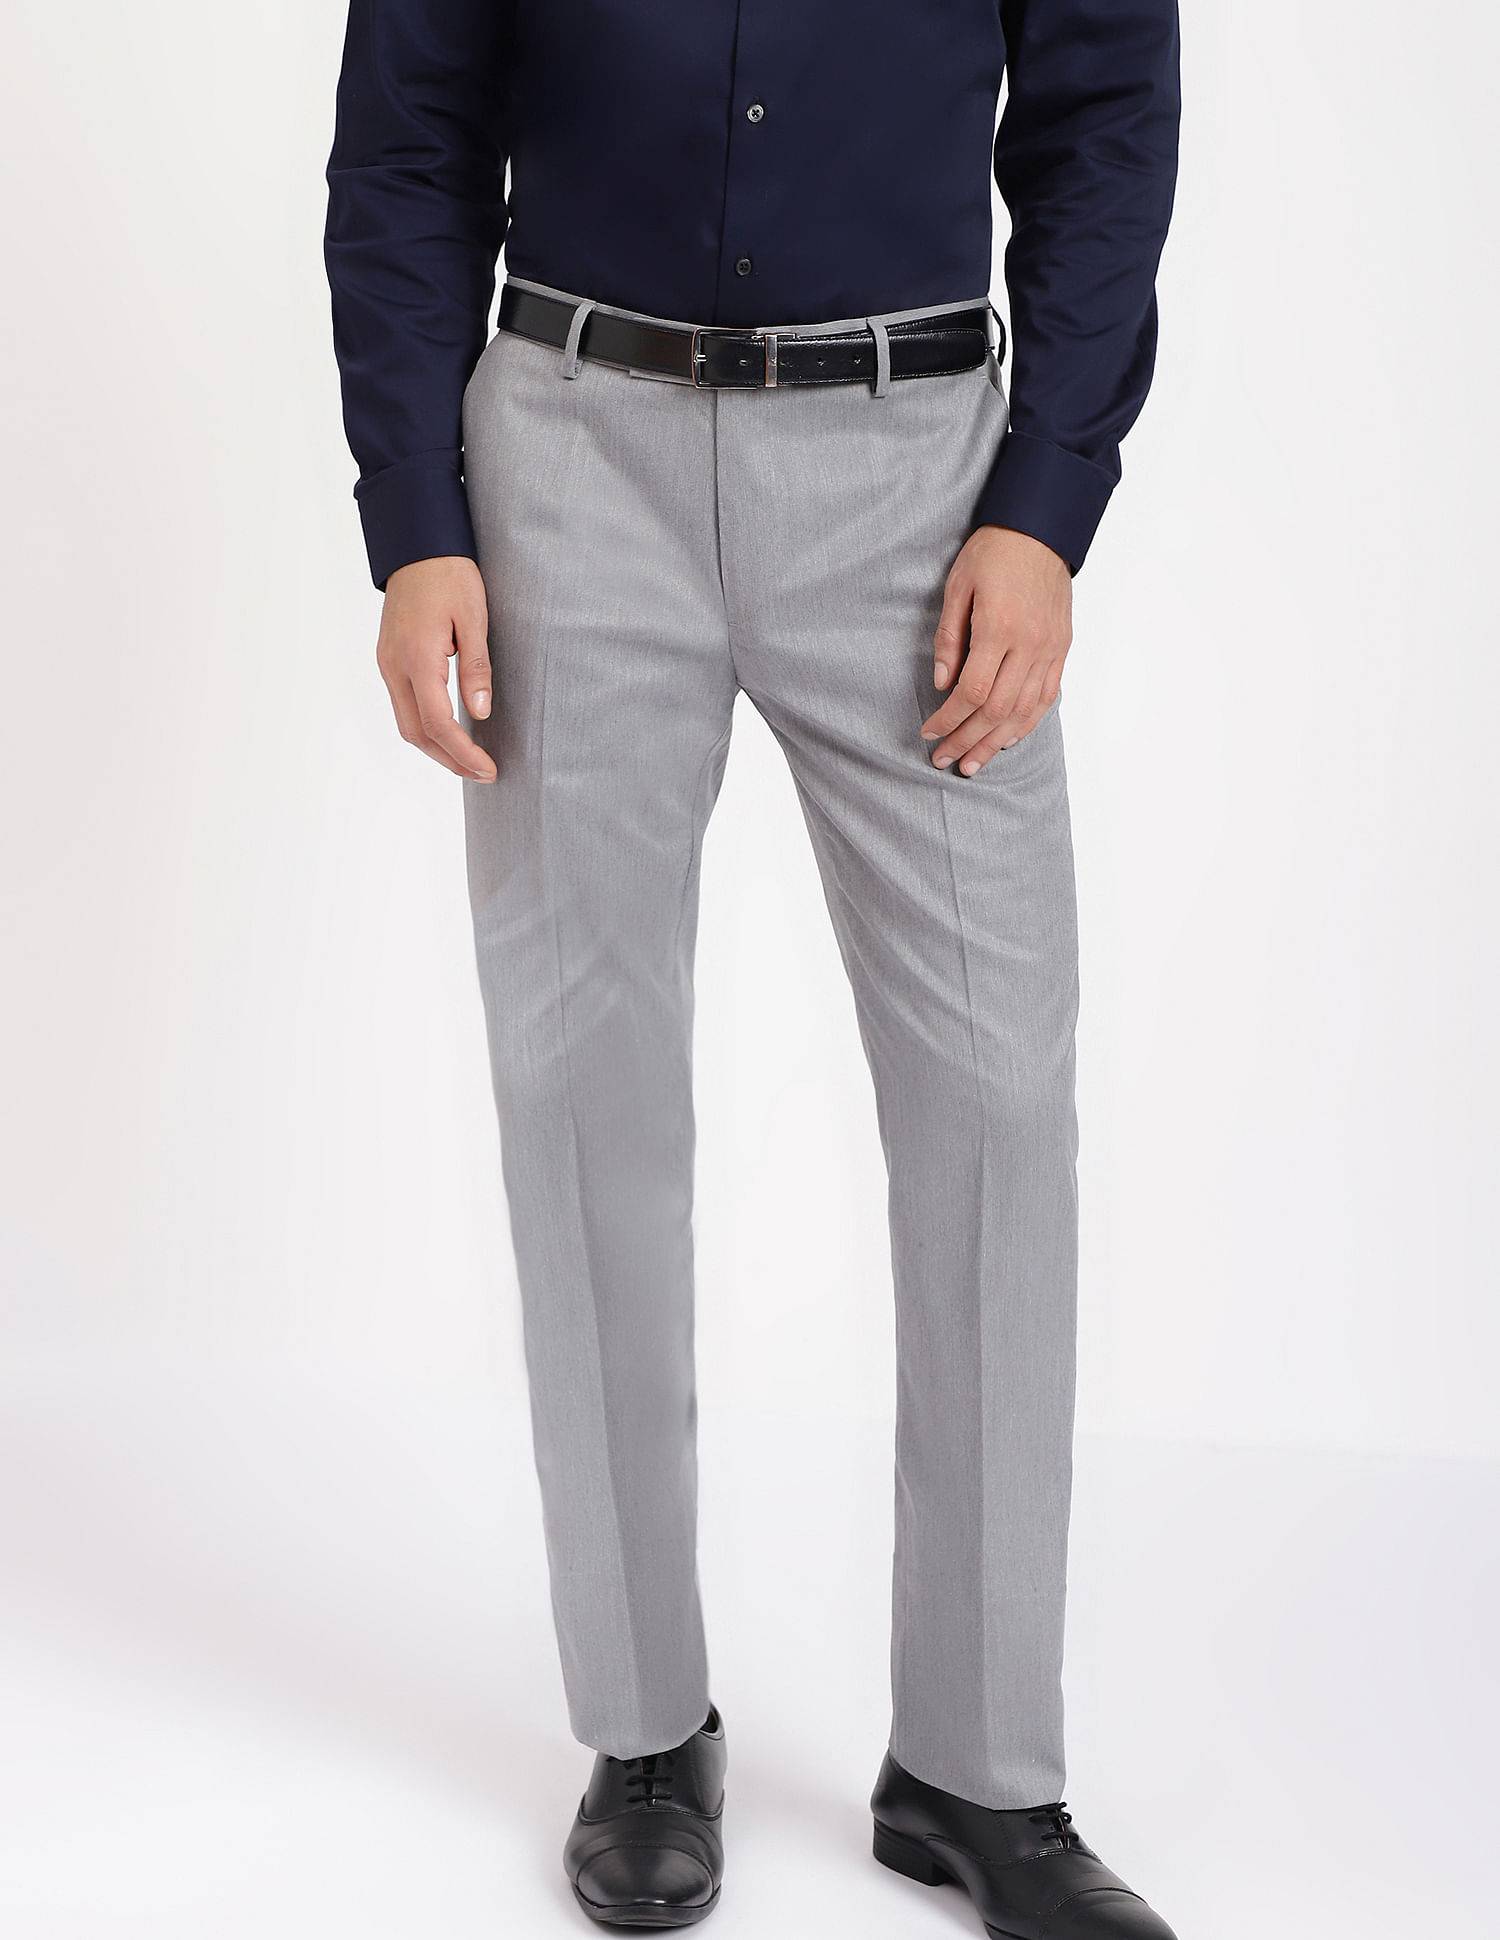 Buy Men Navy Solid Slim Fit Formal Trousers Online  662689  Peter England